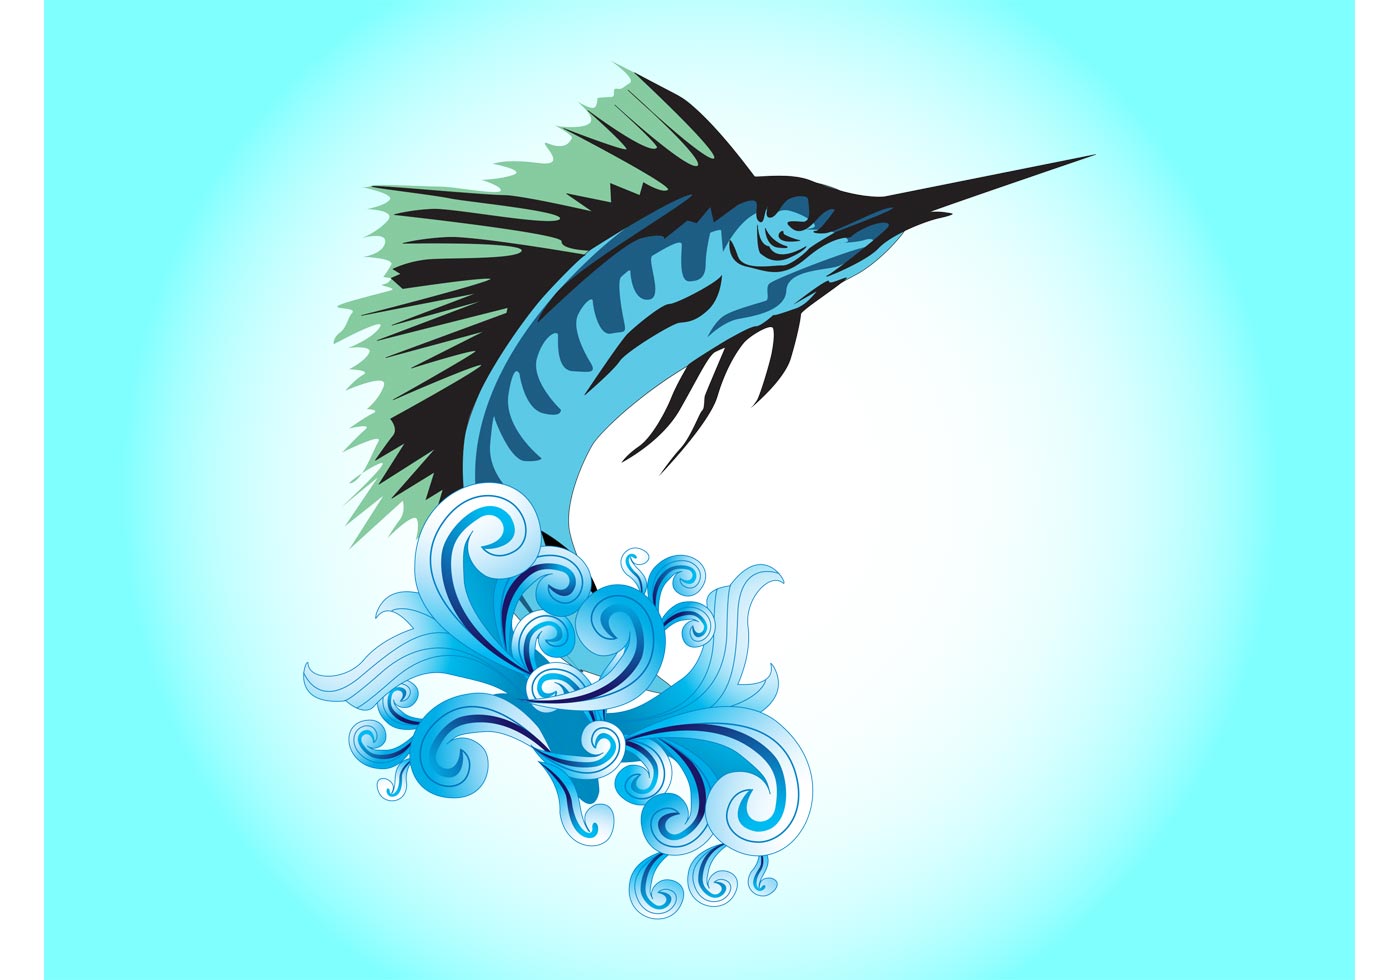 Download Jumping Marlin Fish - Download Free Vector Art, Stock Graphics & Images